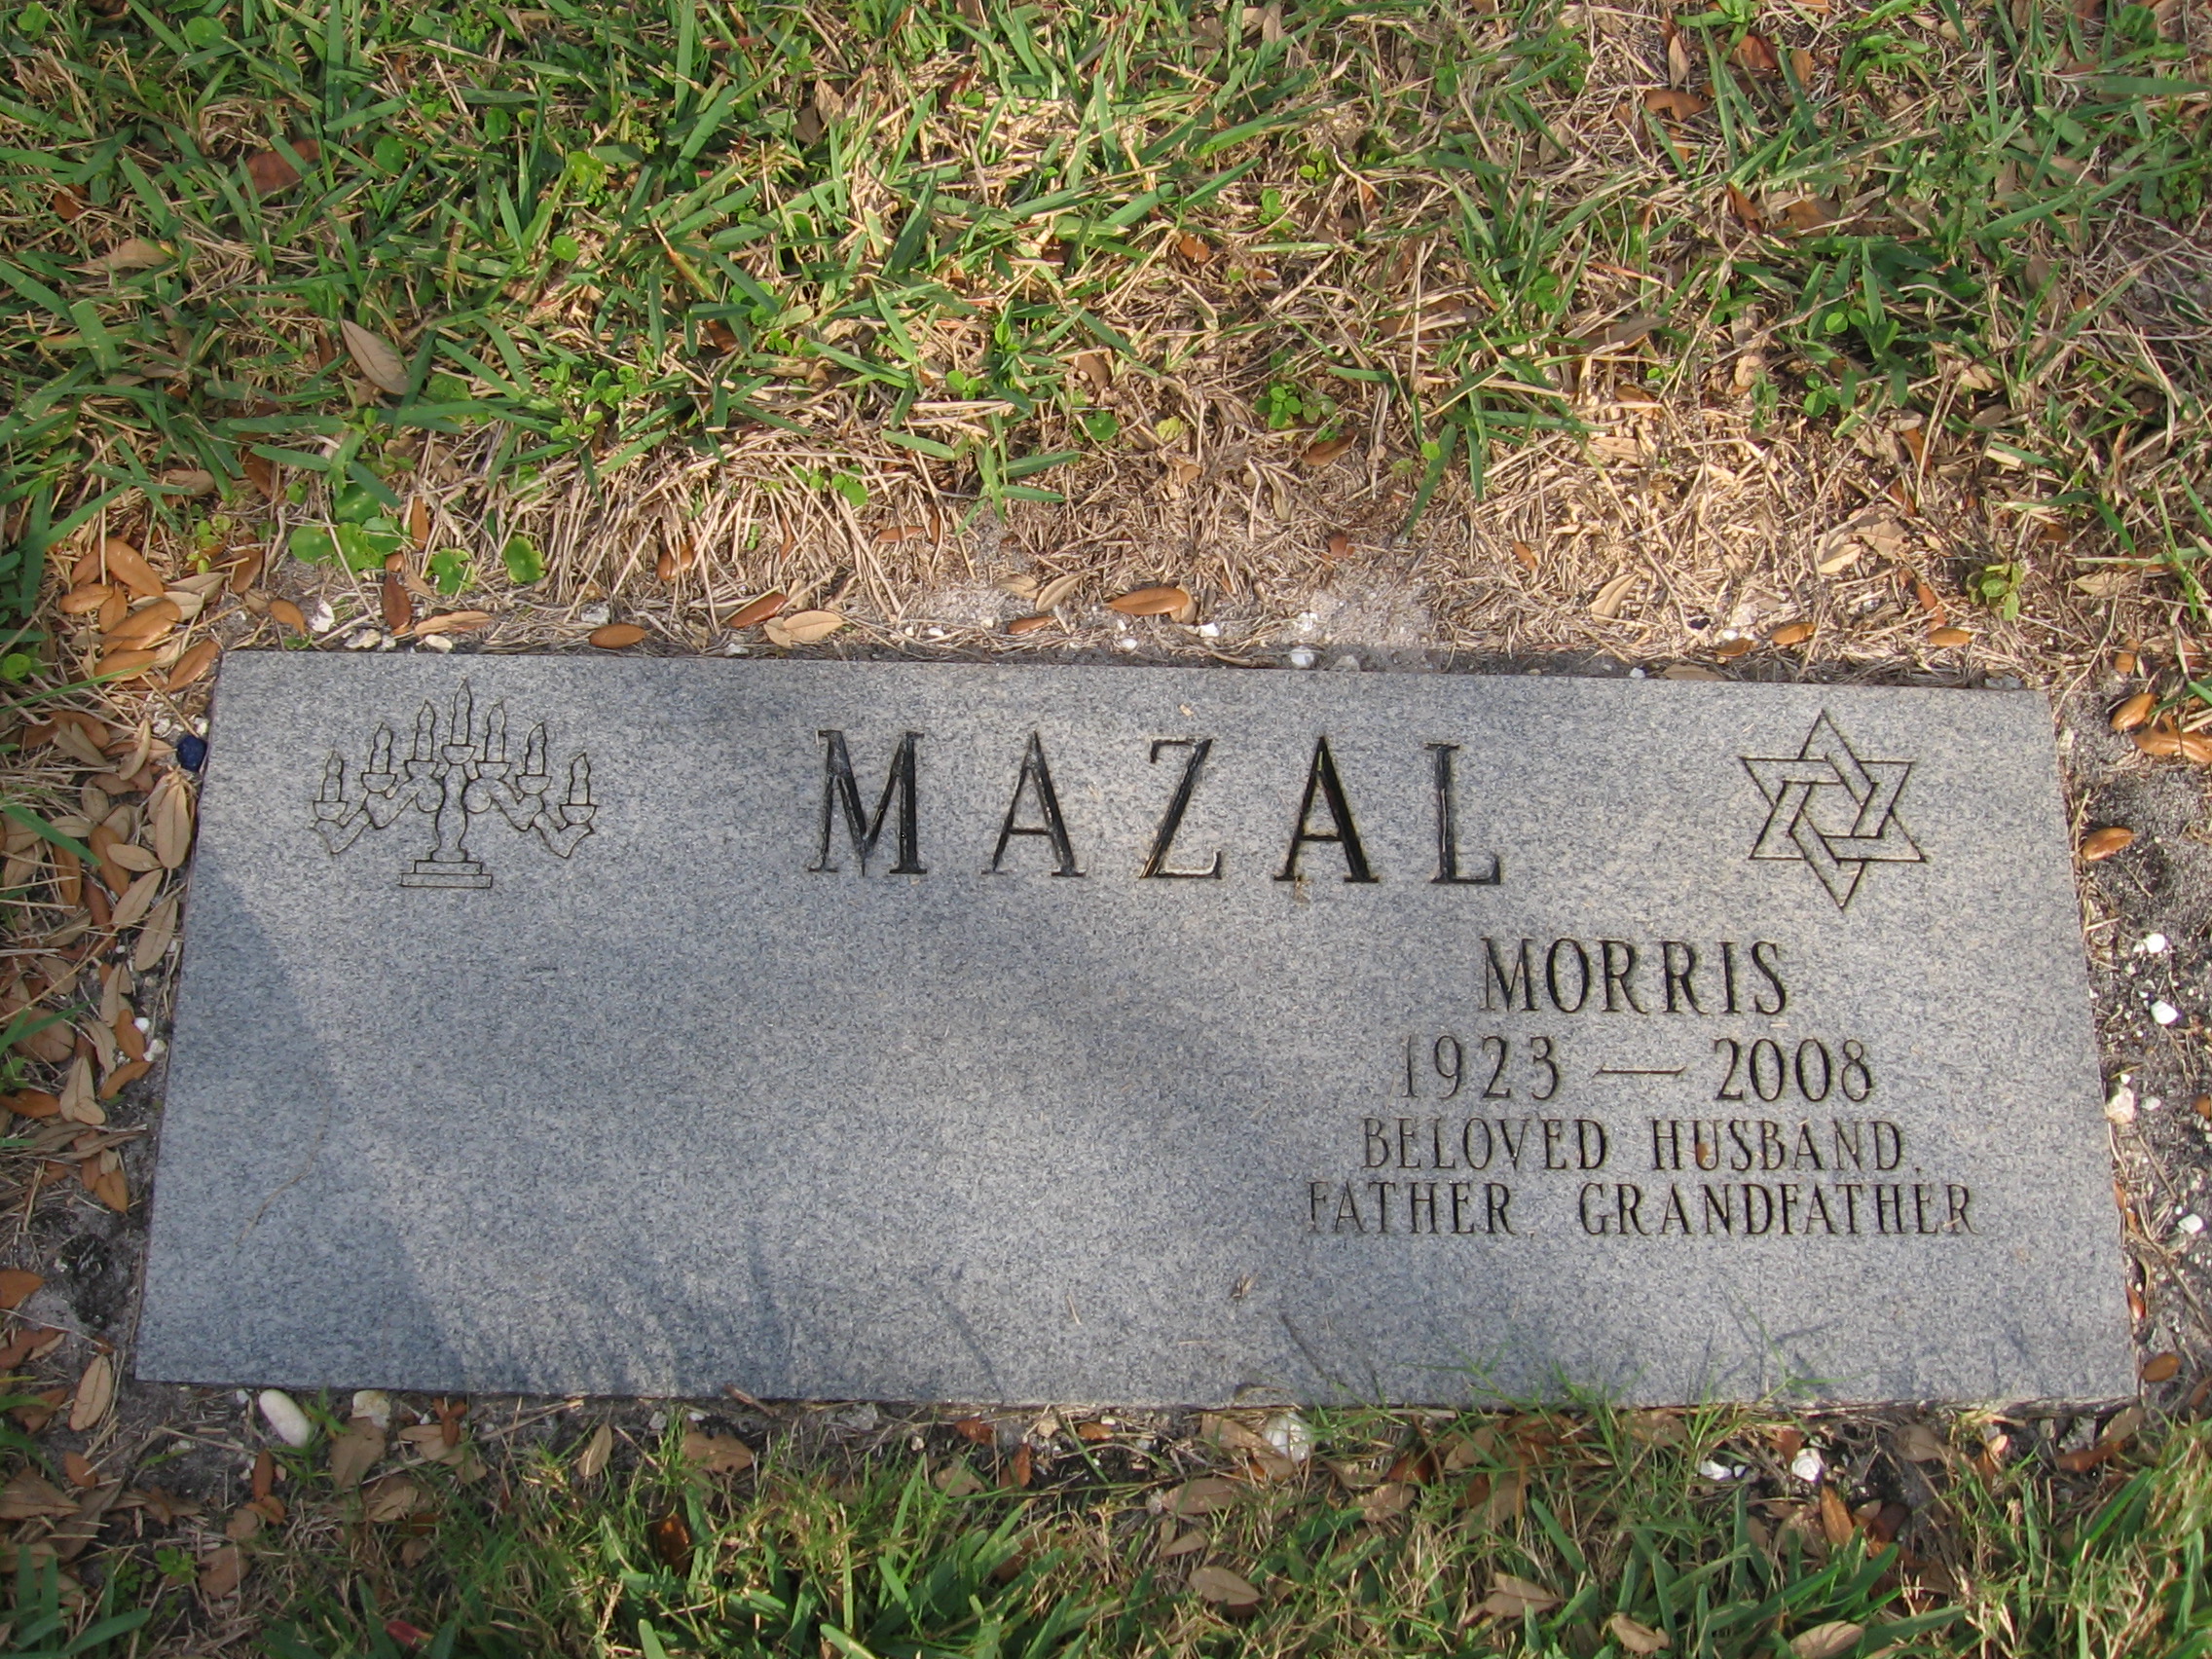 Morris Mazal